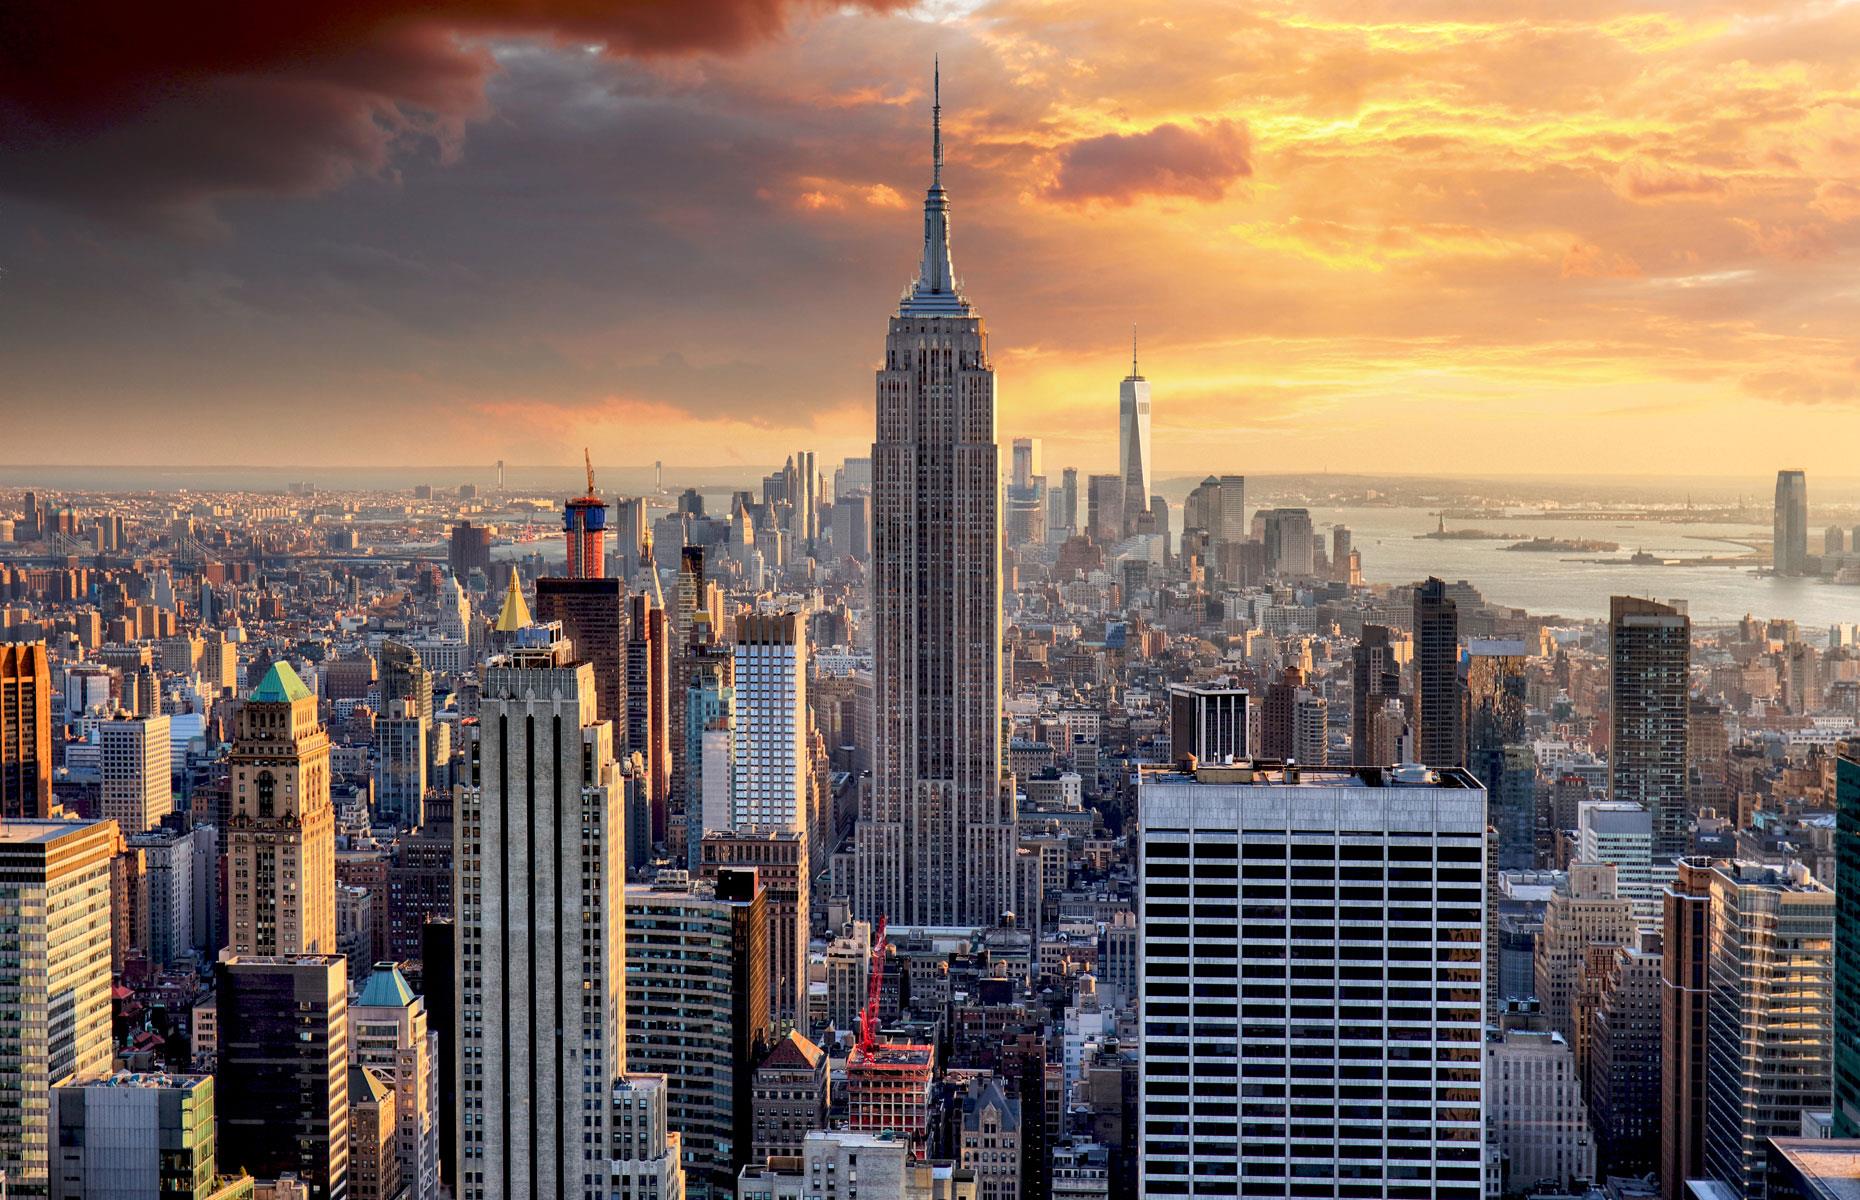 Empire State Building, value: $1.89 billion (£1.46bn)